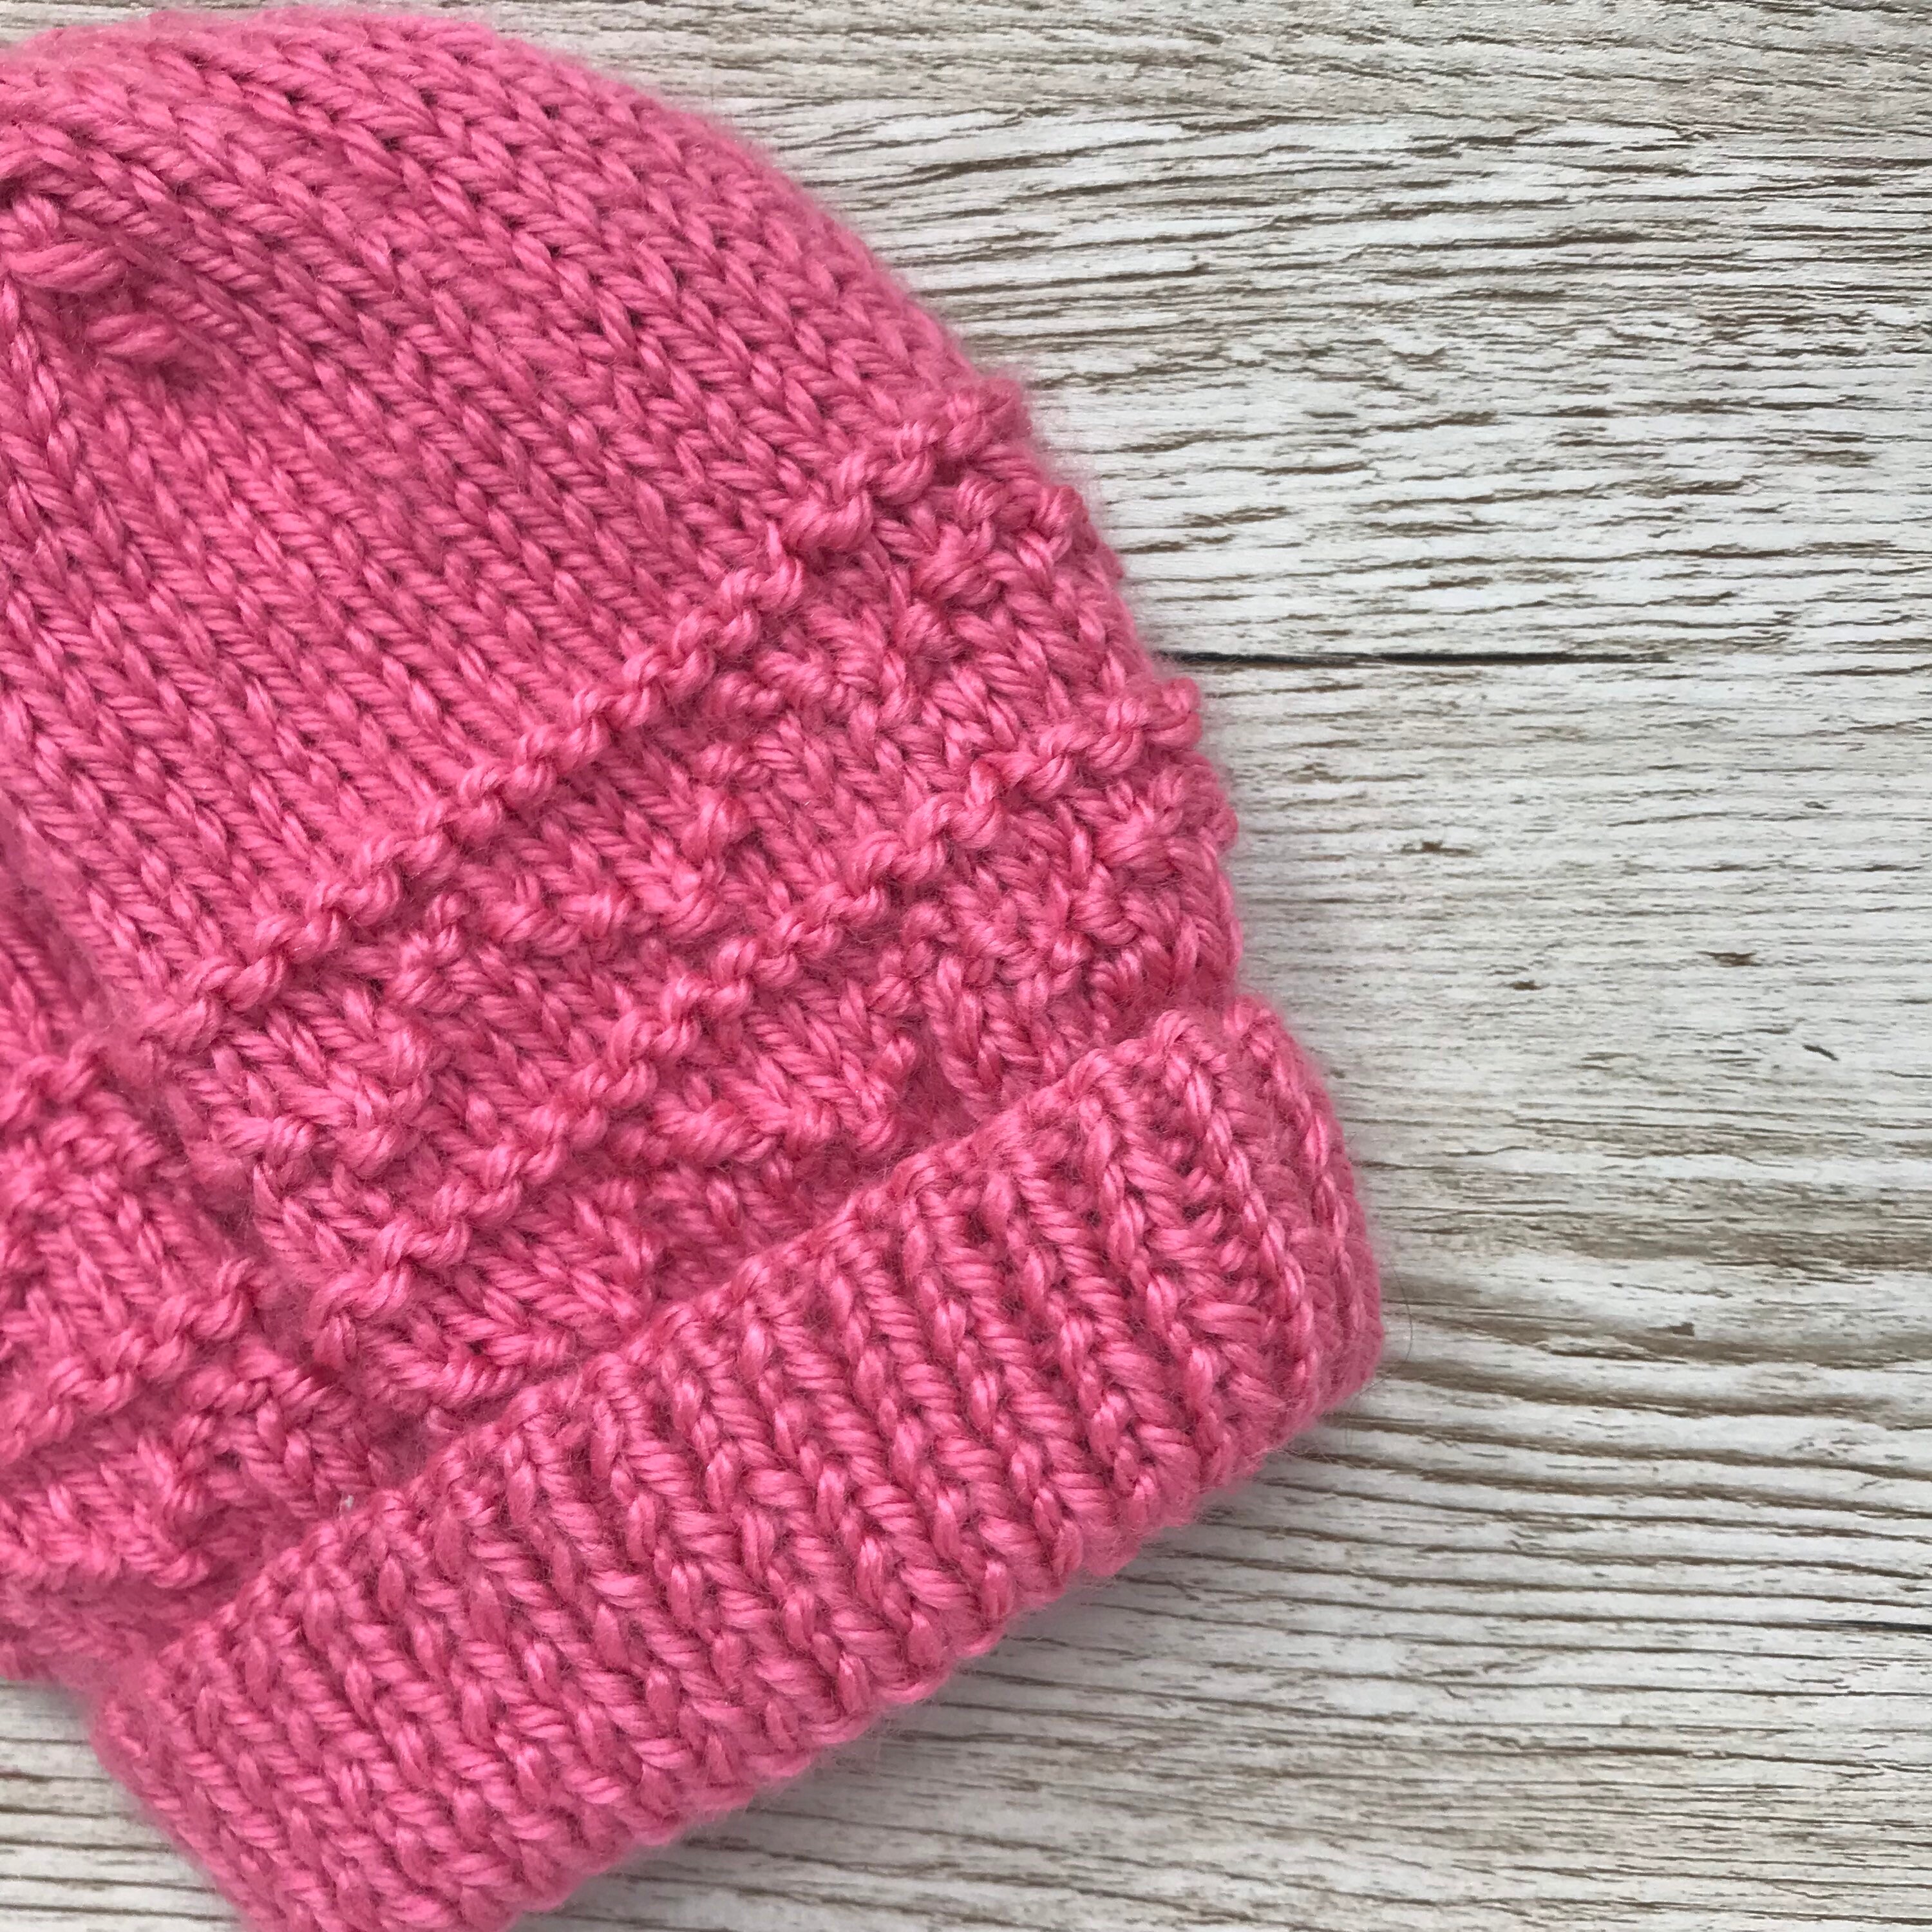 BN hand-knitted hat baby pink 6-12 months DK5 